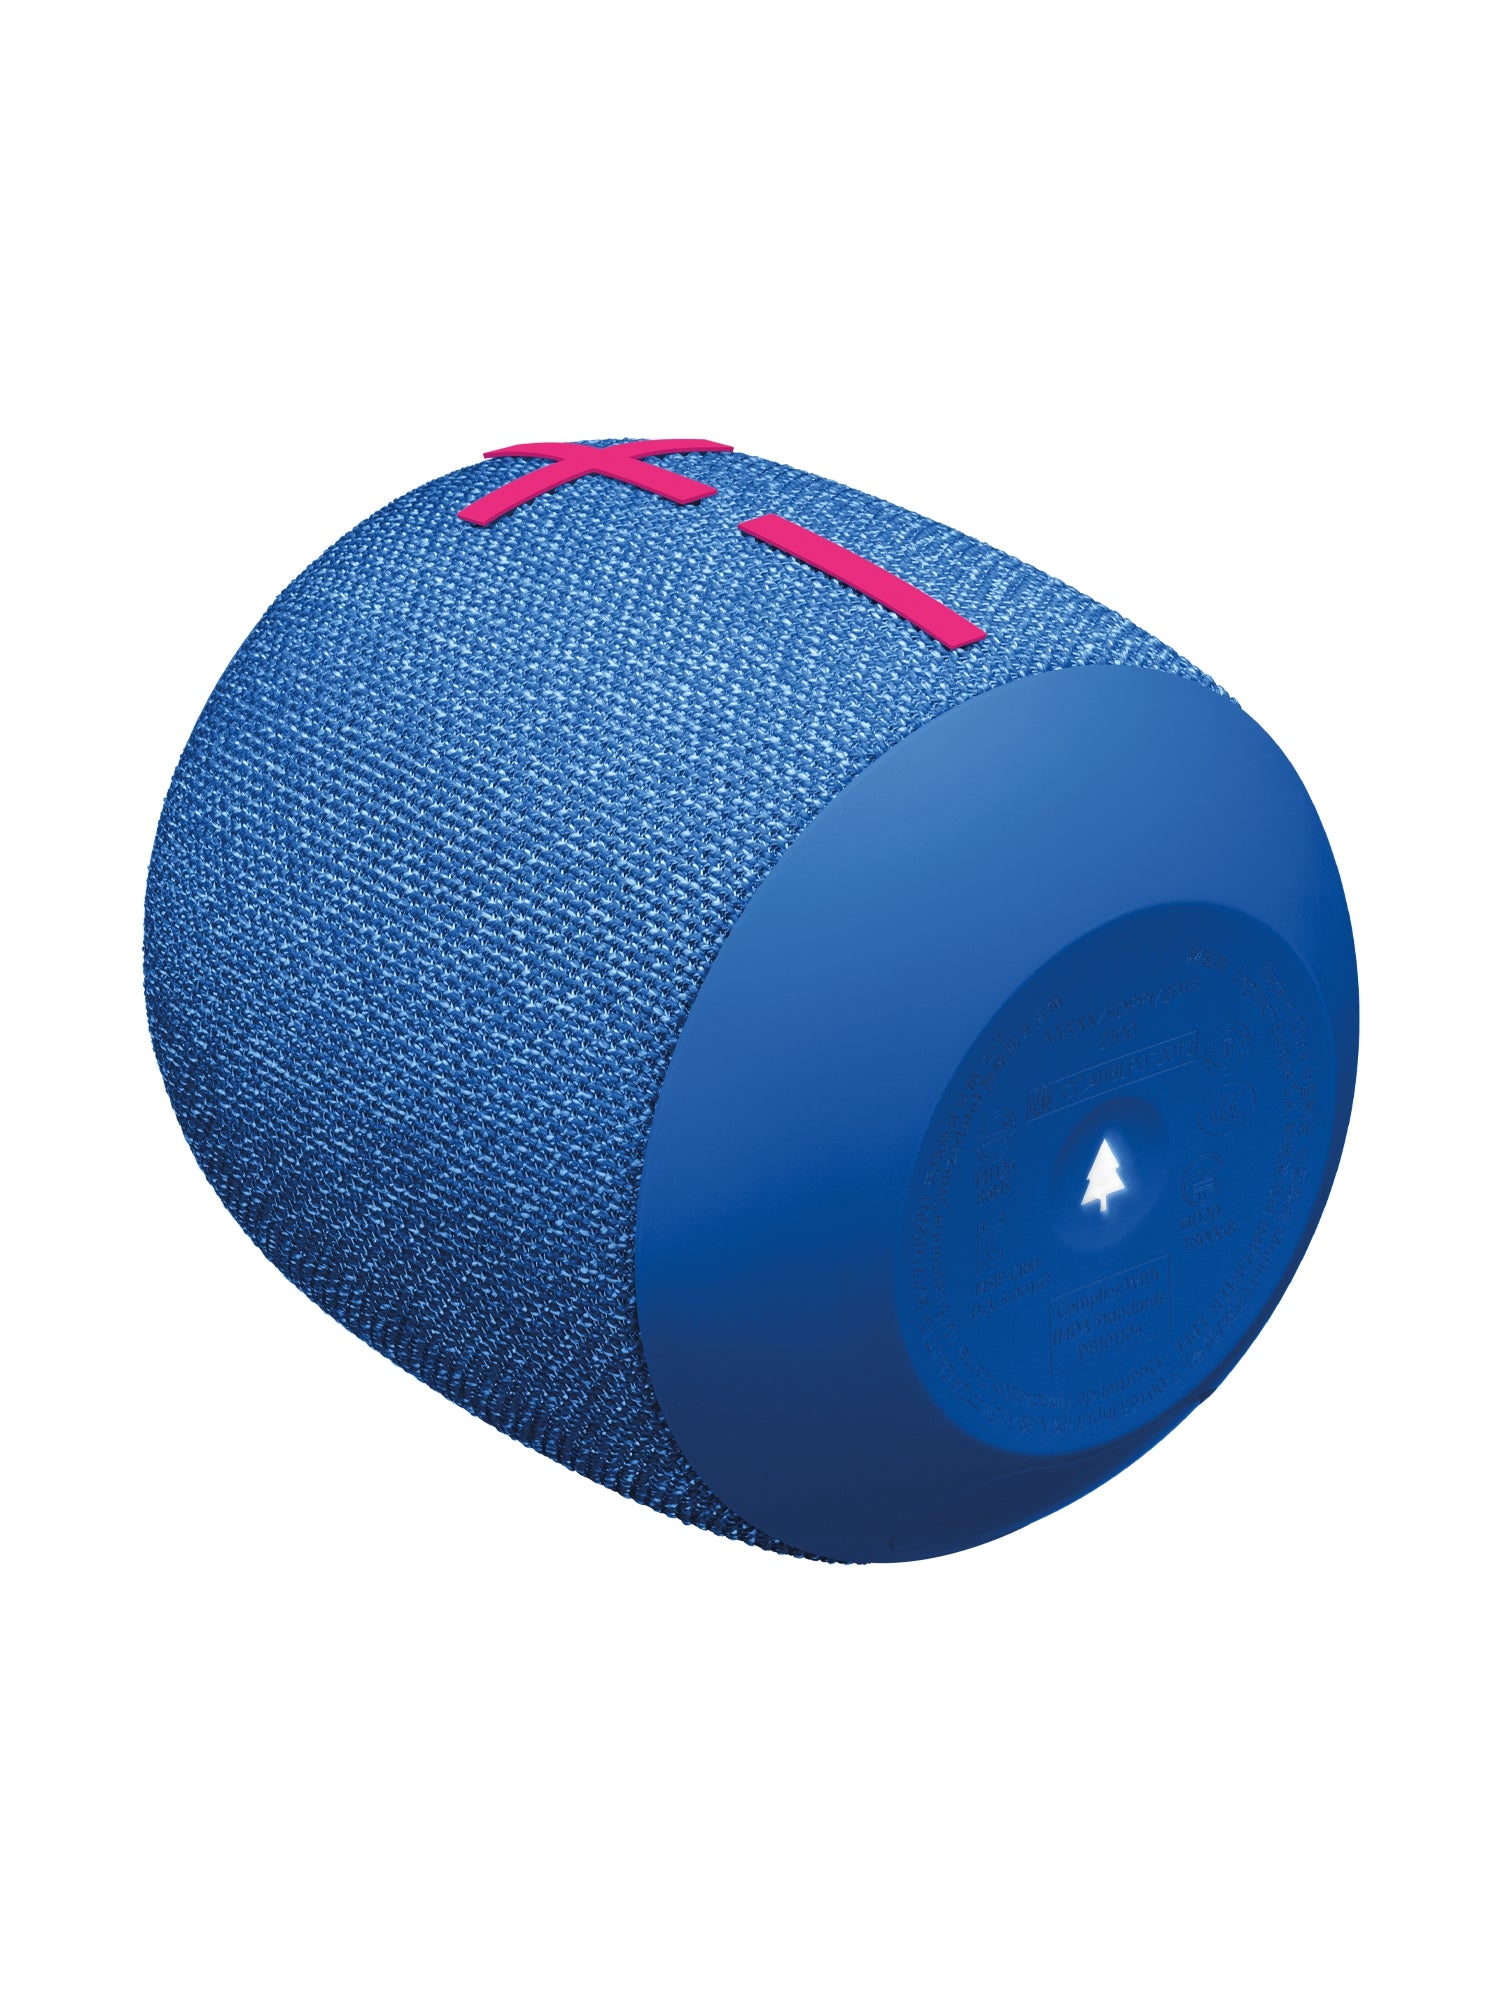 Bocina Ultimate Ears Wonderboom 3 Azul Portatil Bluetooth Ip67 Resistente Al Agua, Al Polvo Y Flota